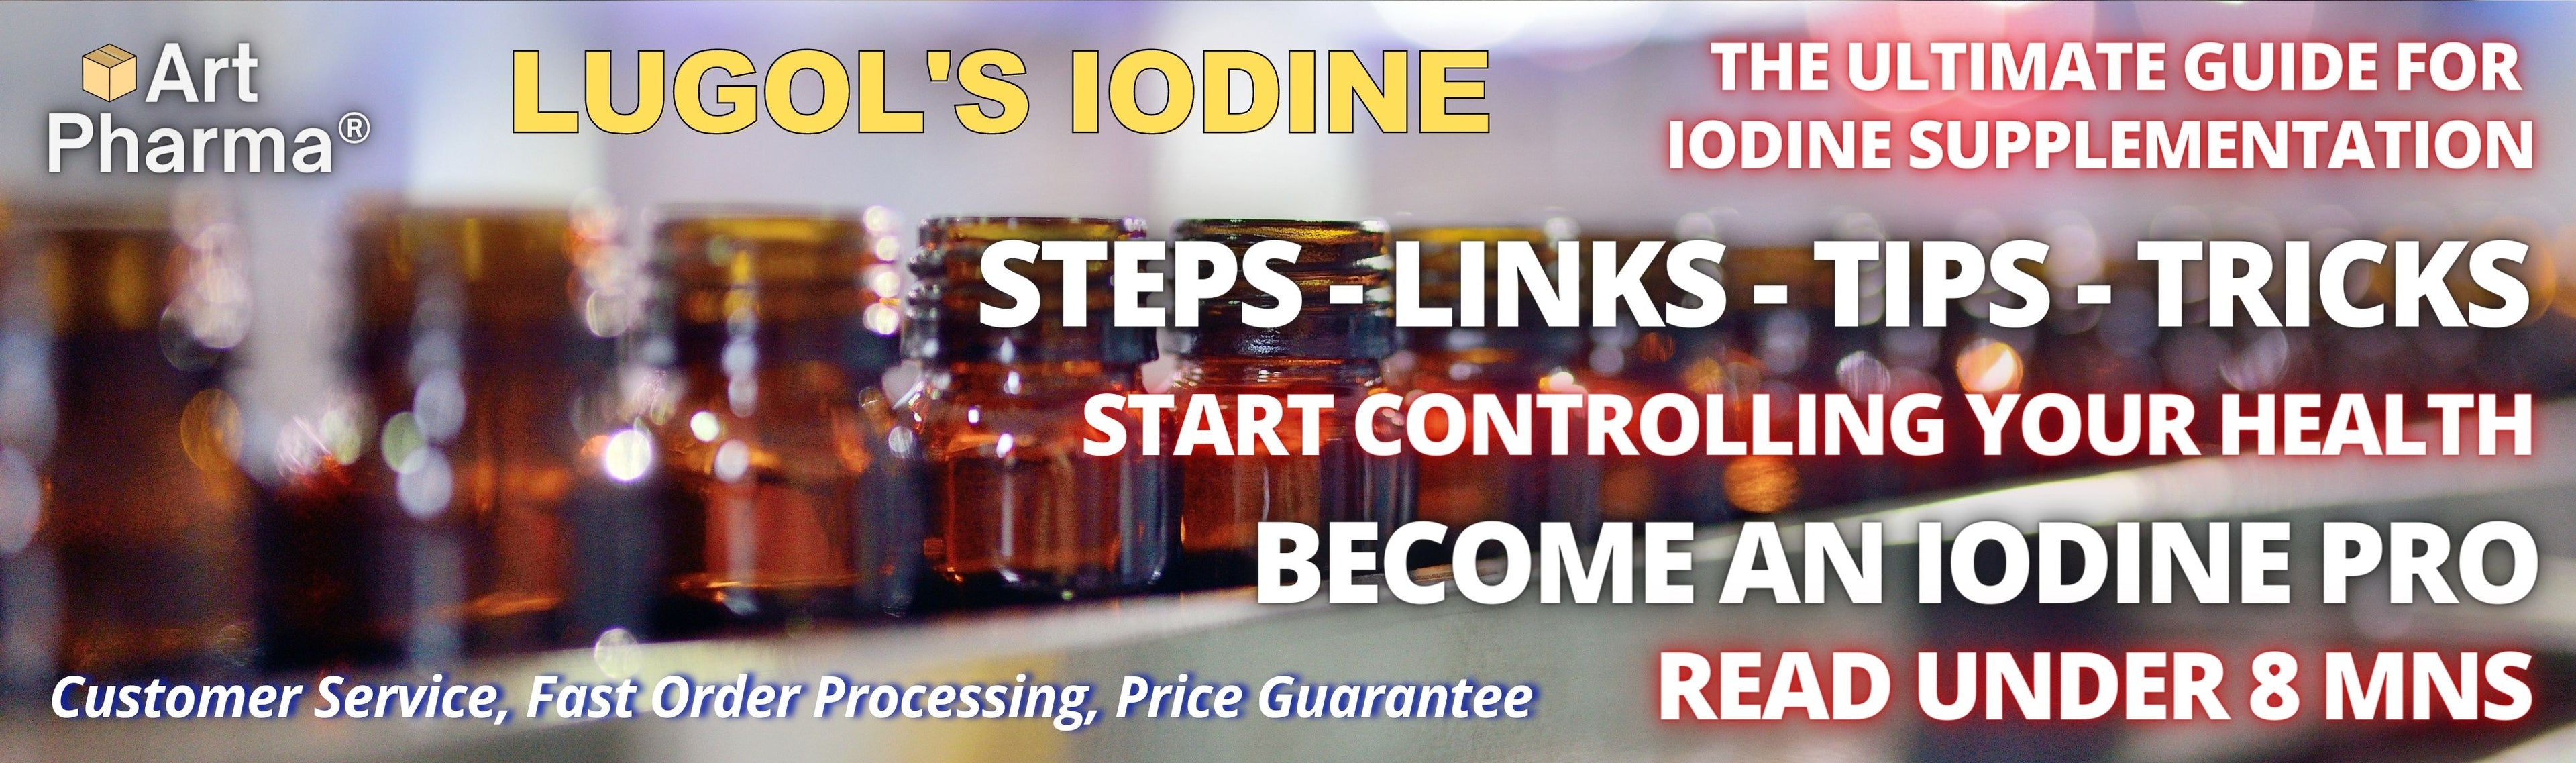 Art Pharma Article Iodine Supplementation